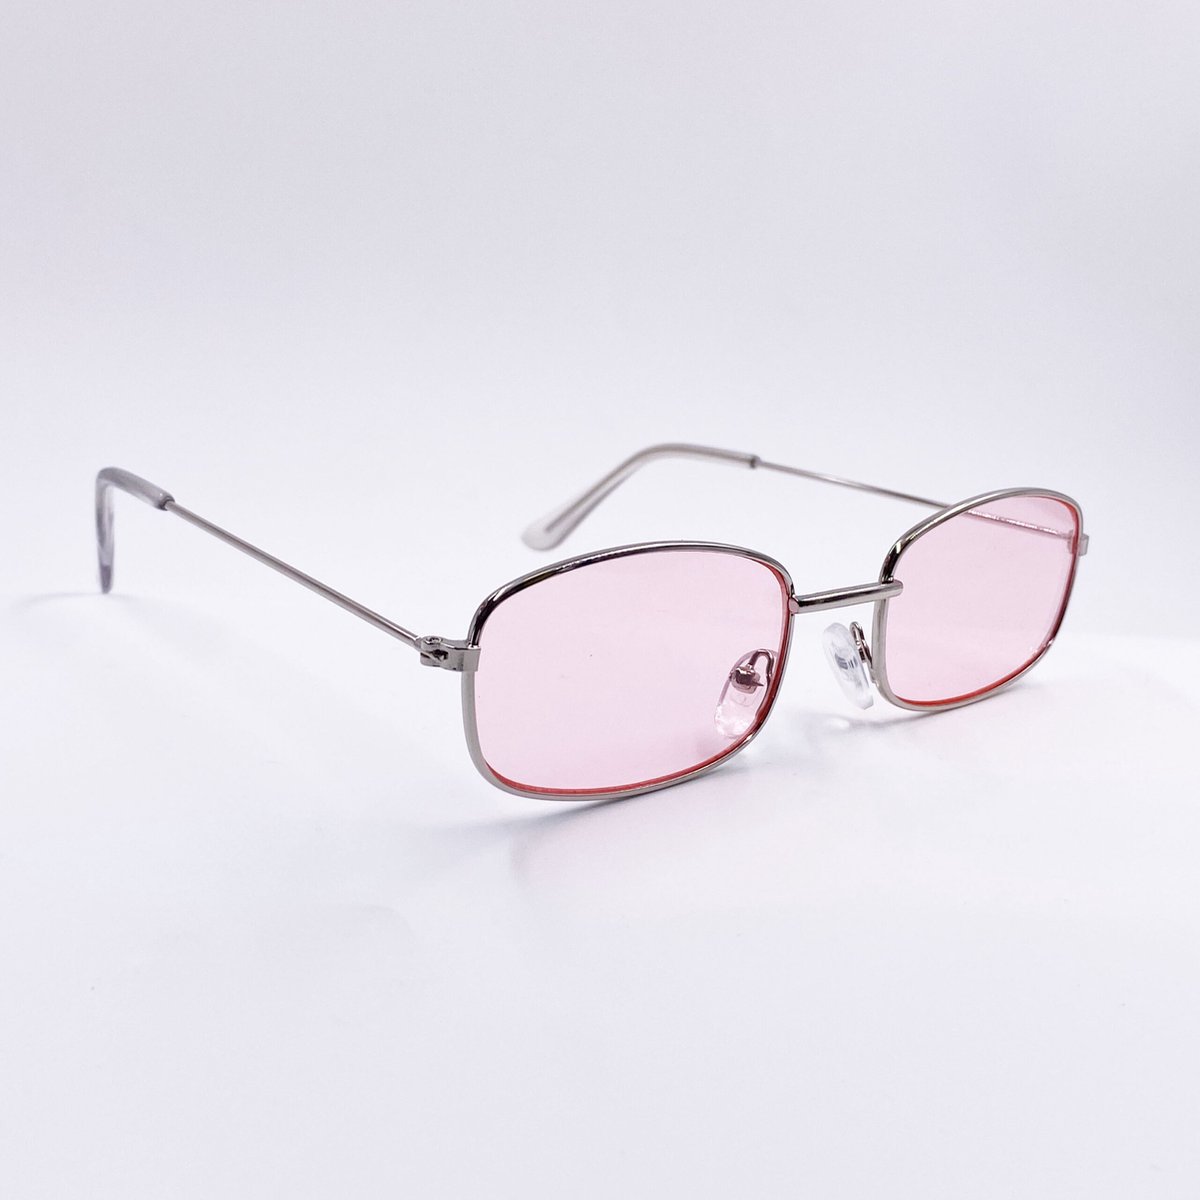 Retro Glasses - festivalbril - zonnebril - feestbril - festival spacebril - festivalzonnebril | Roze | PartyGlasses